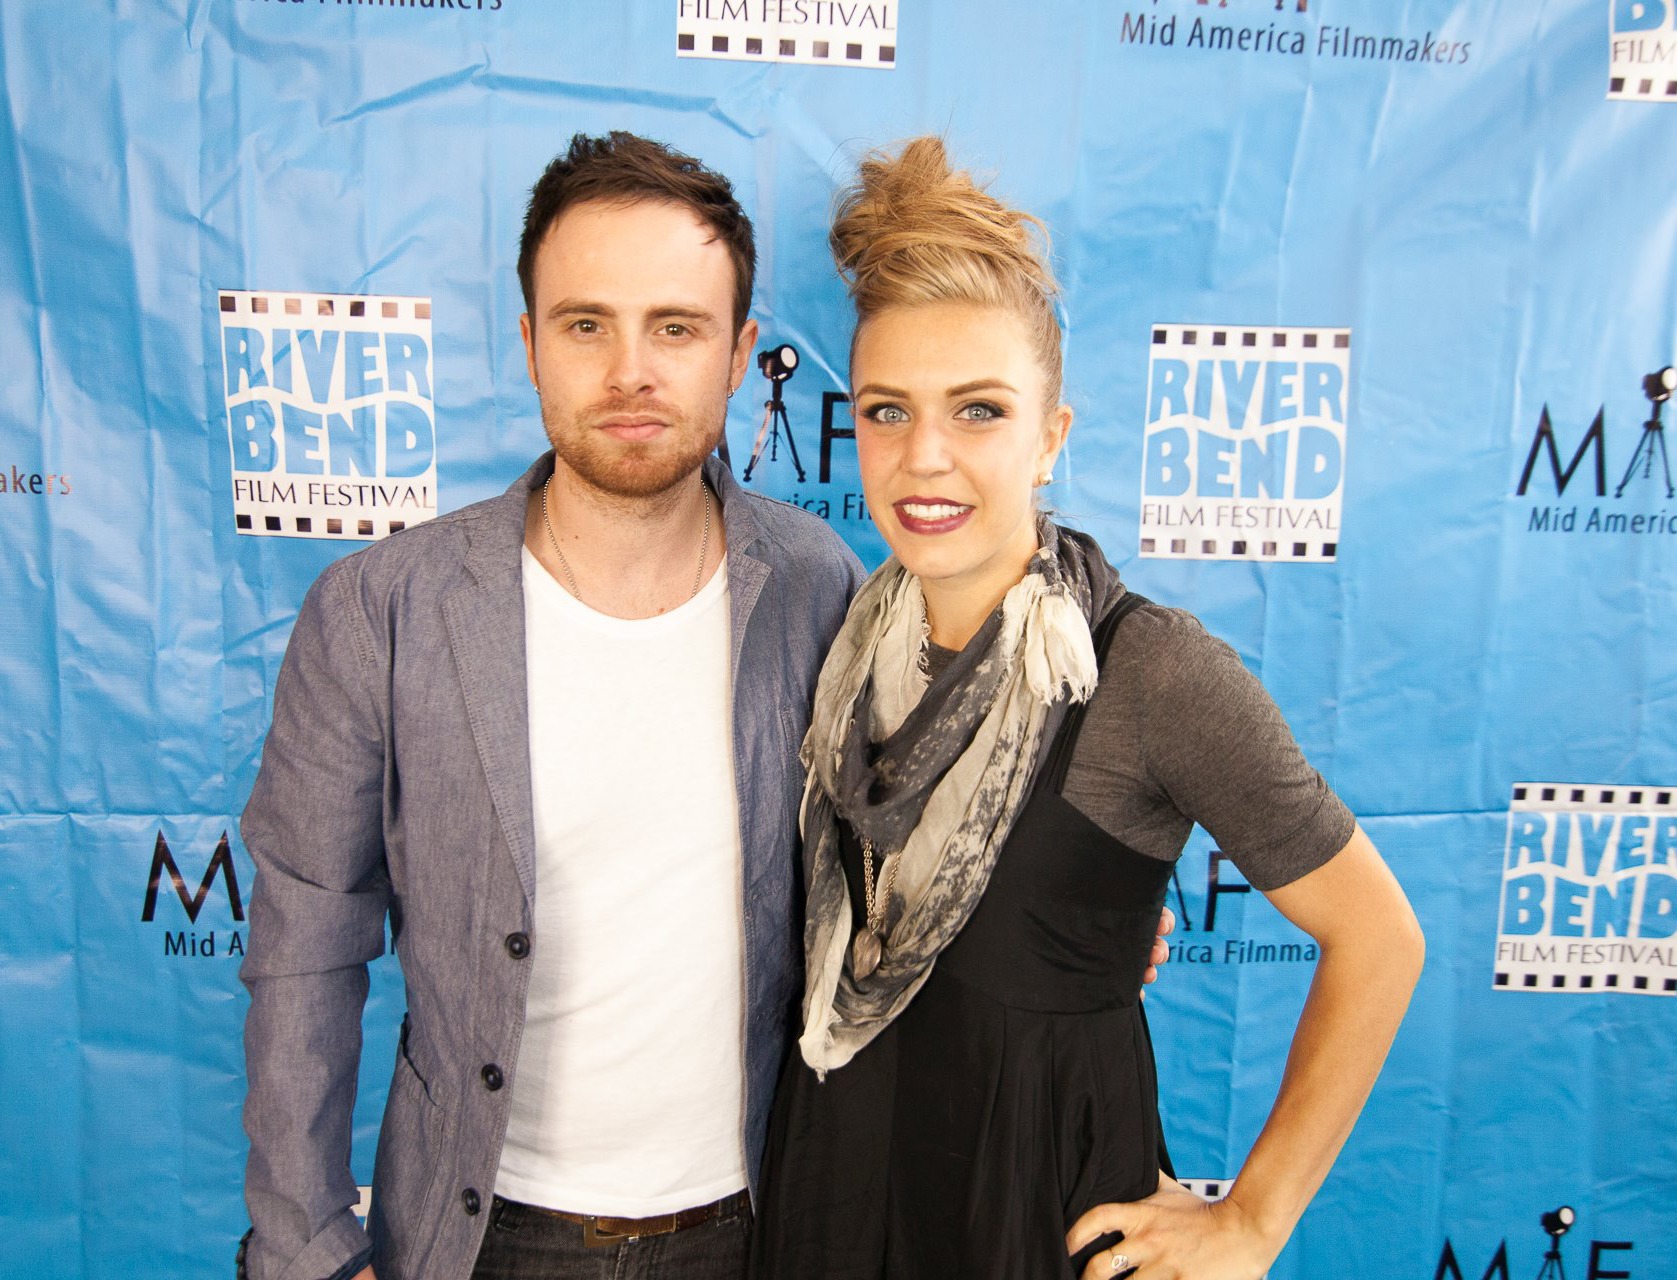 Jordon Hodges and Natalie Stalter at the River Bend Film Festival